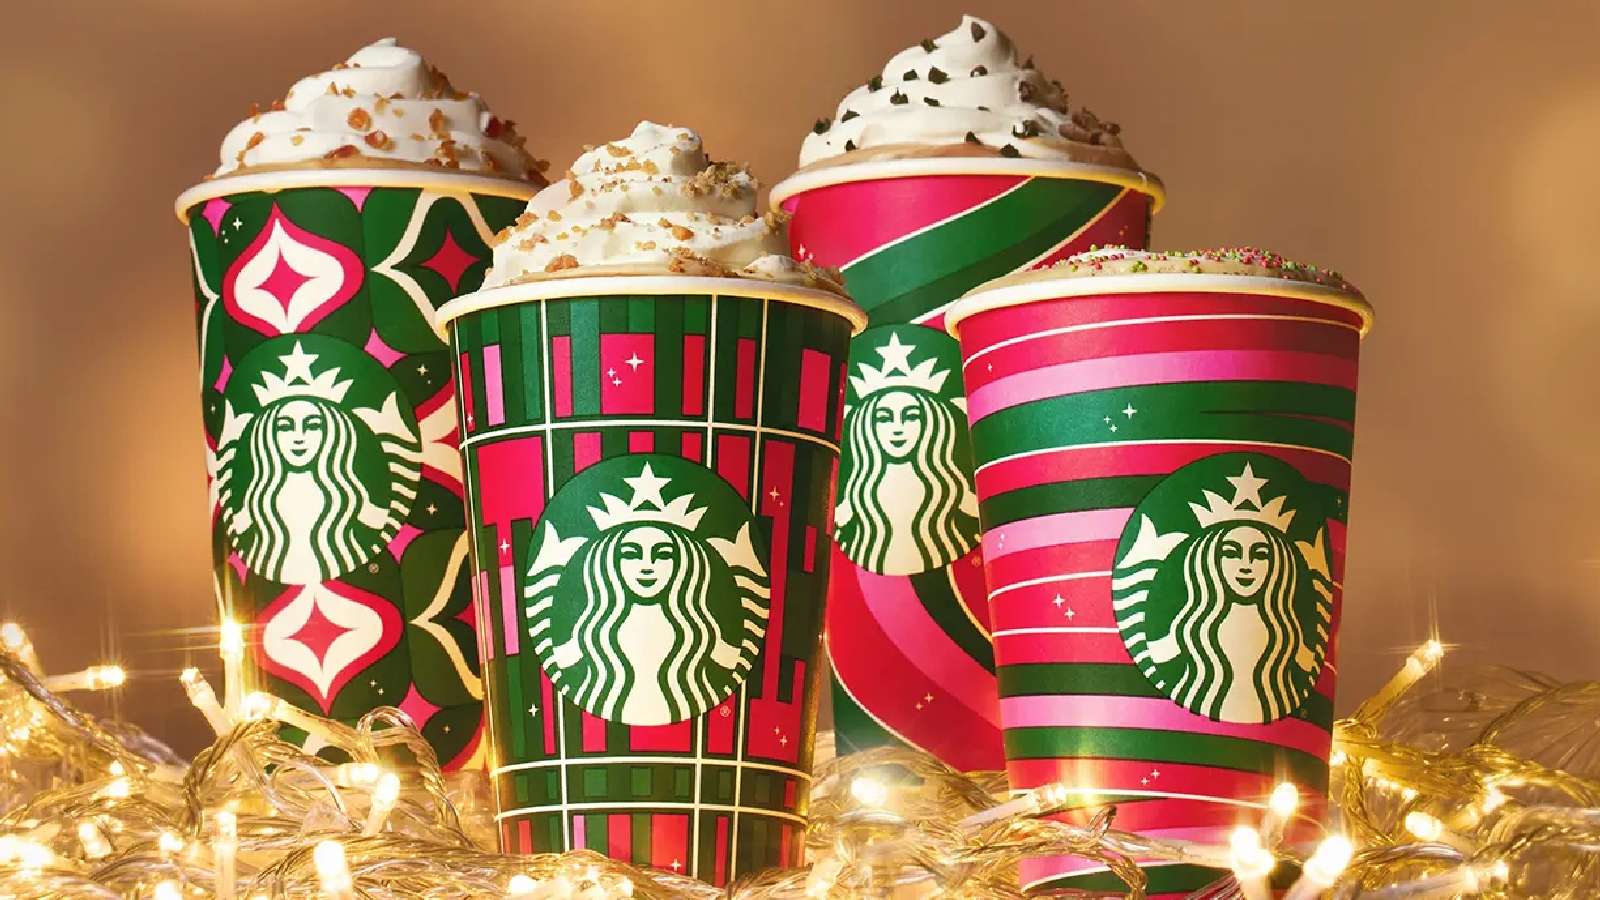 The image shows seasonal drinks by Starbucks